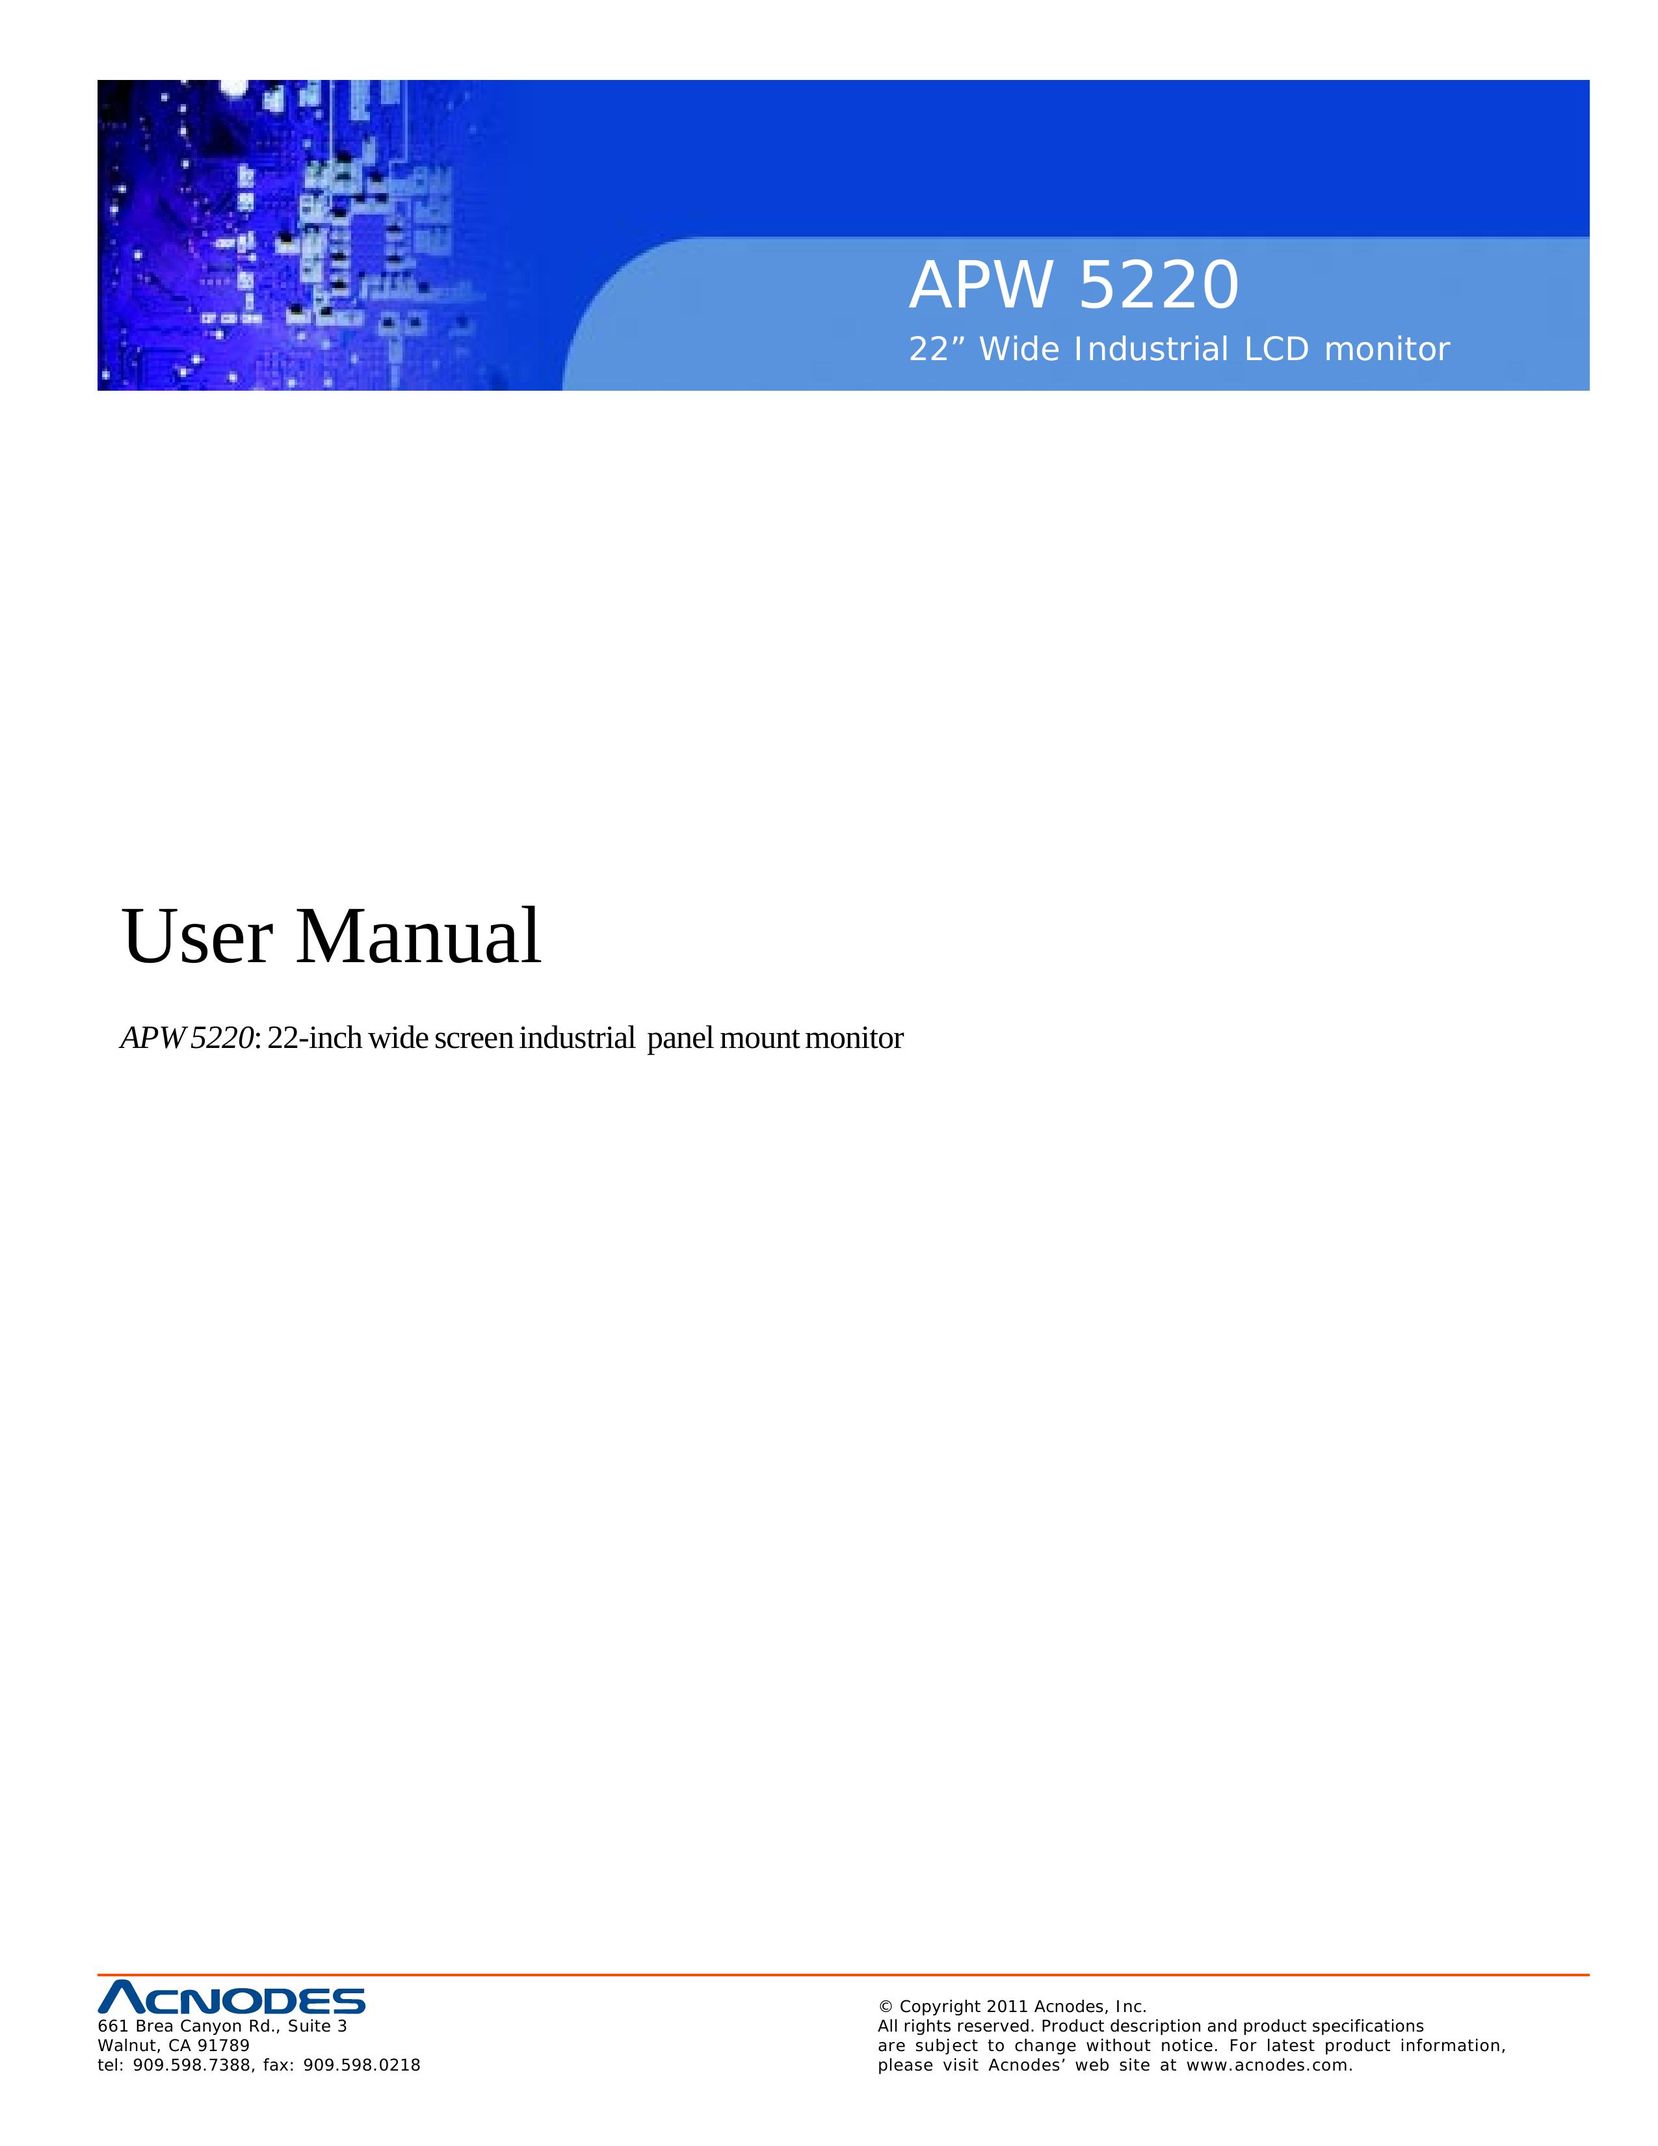 Acnodes APW 5220 Computer Monitor User Manual